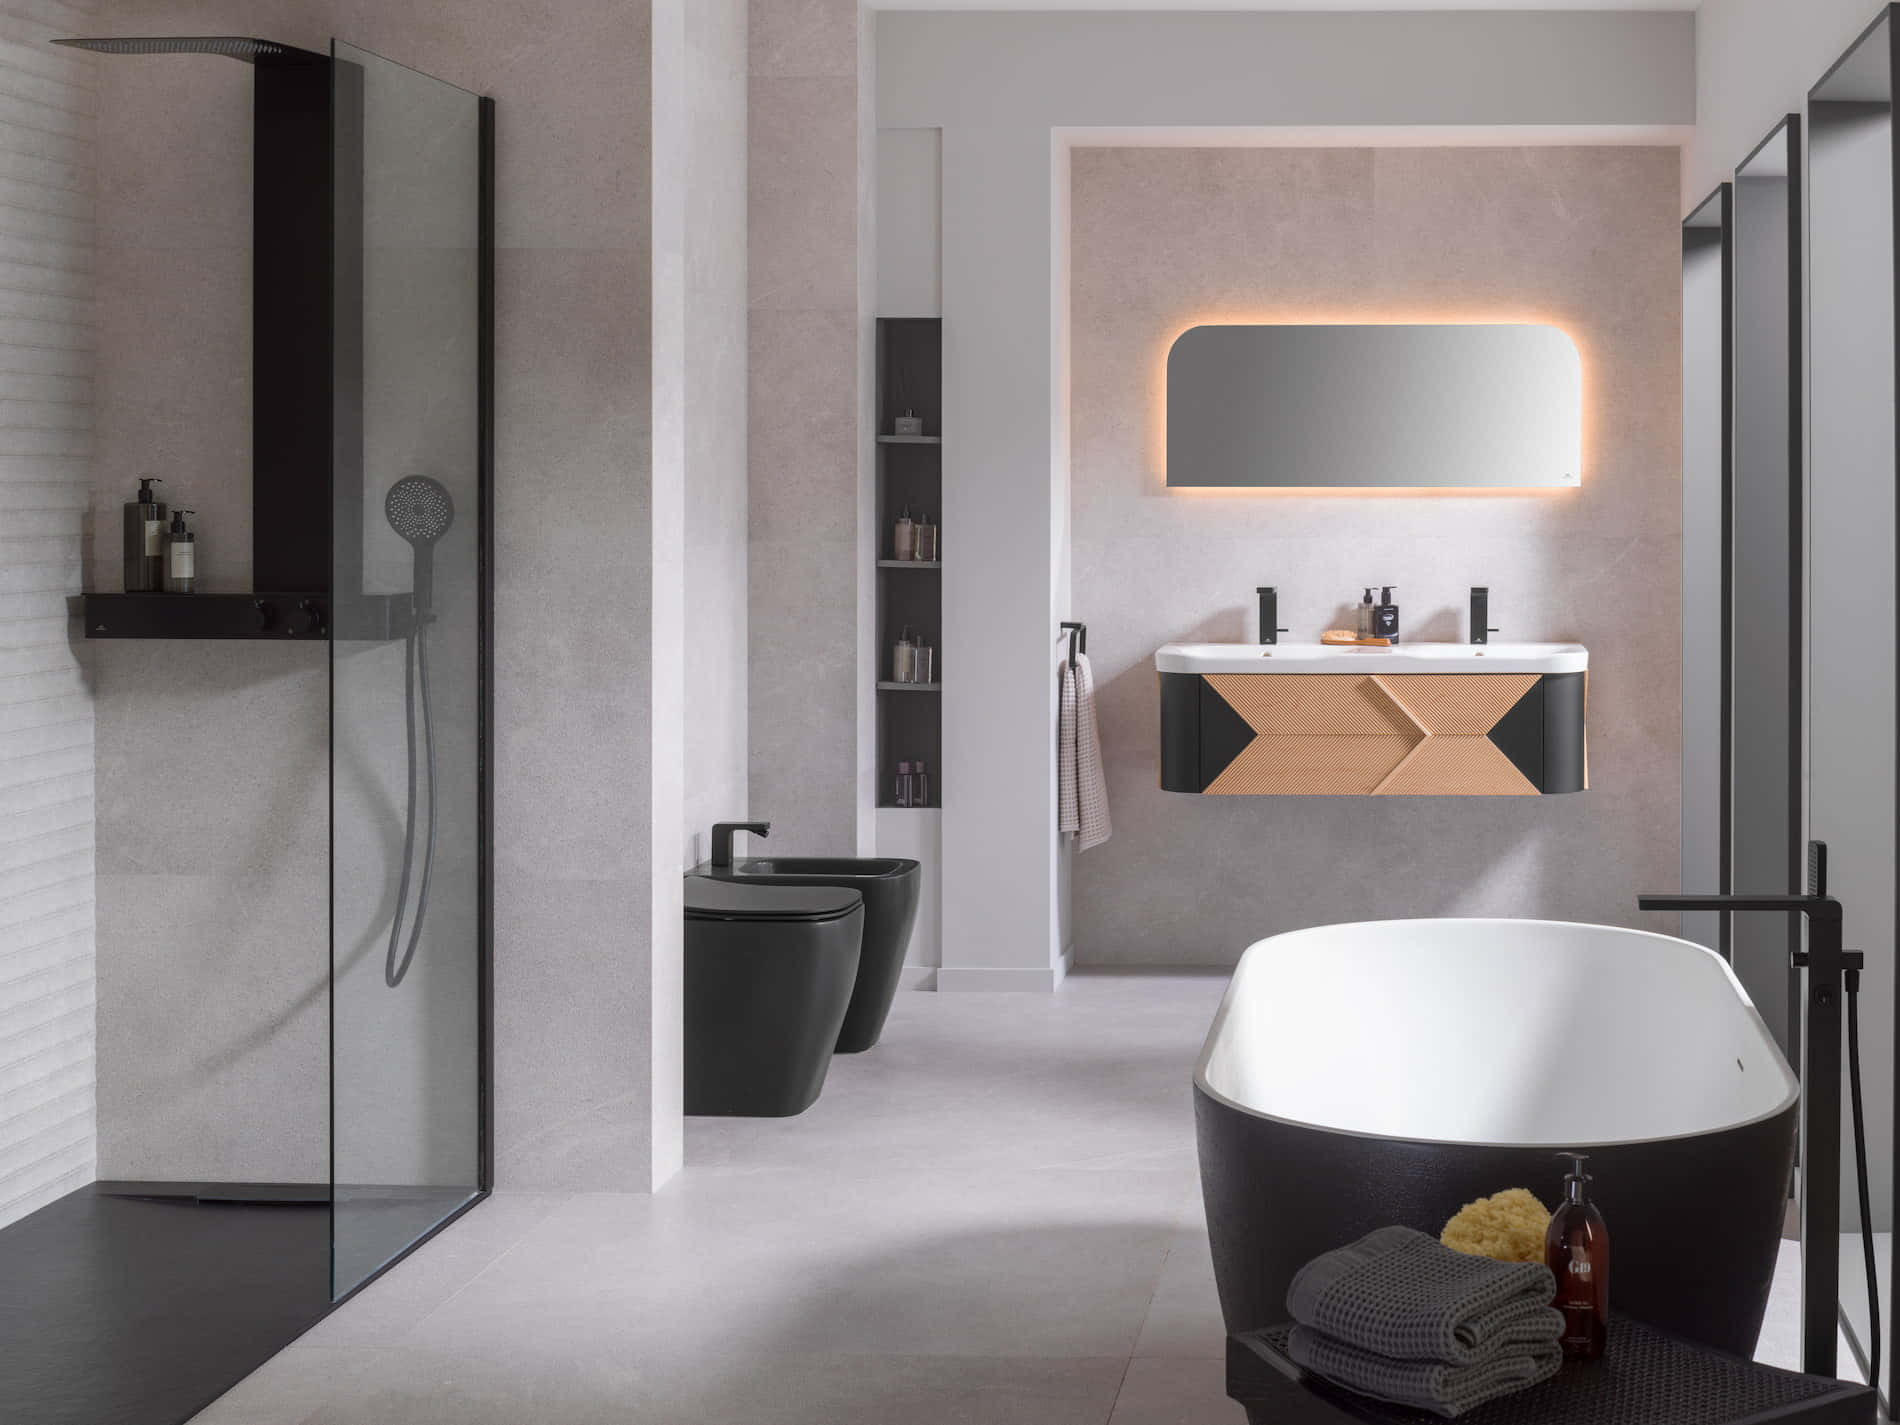 A Modern Bathroom With A Black Tub And Mirror